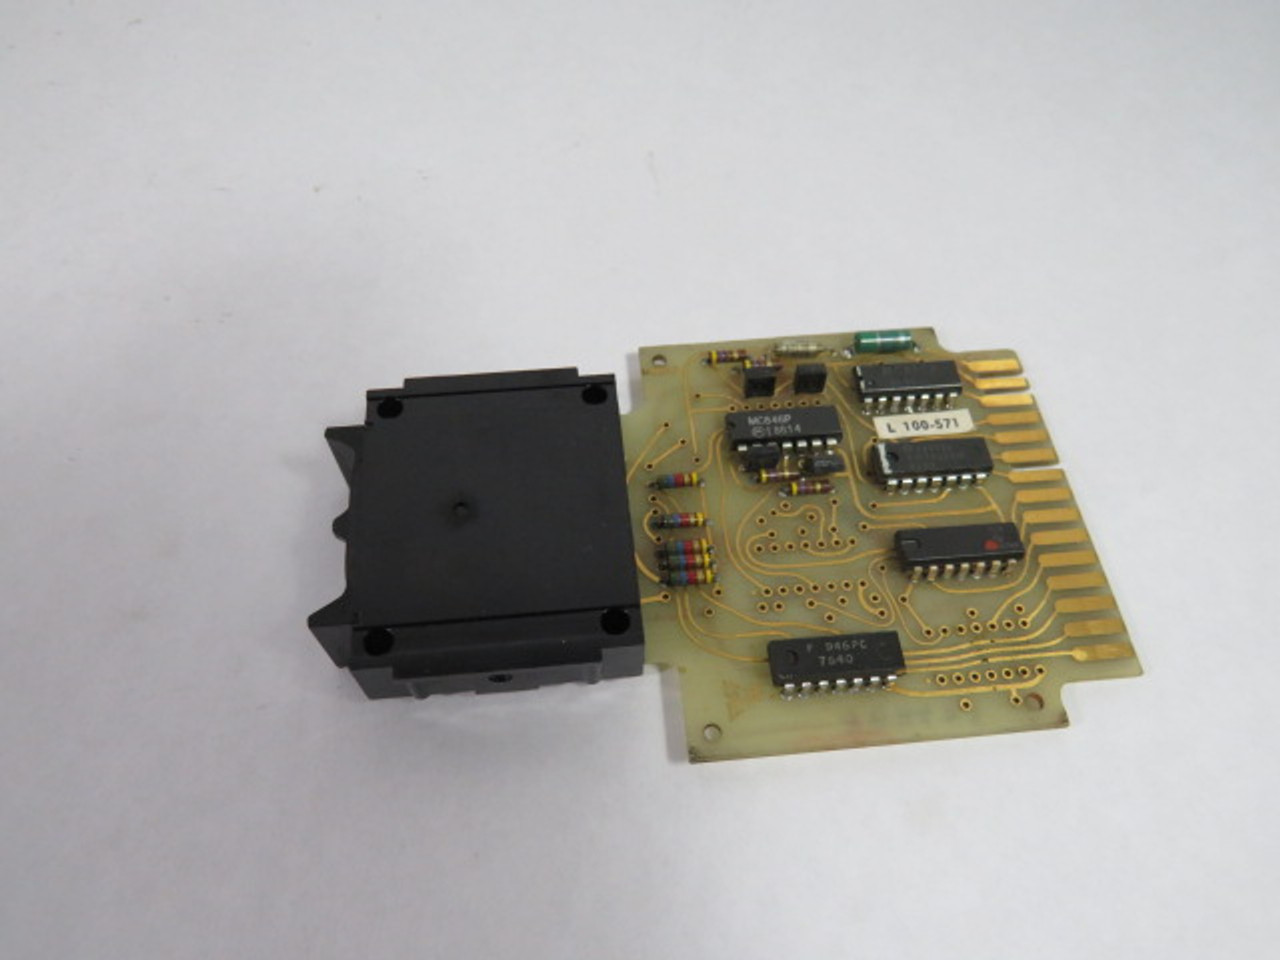 Unico L100-571 PC Card w/ Counter USED